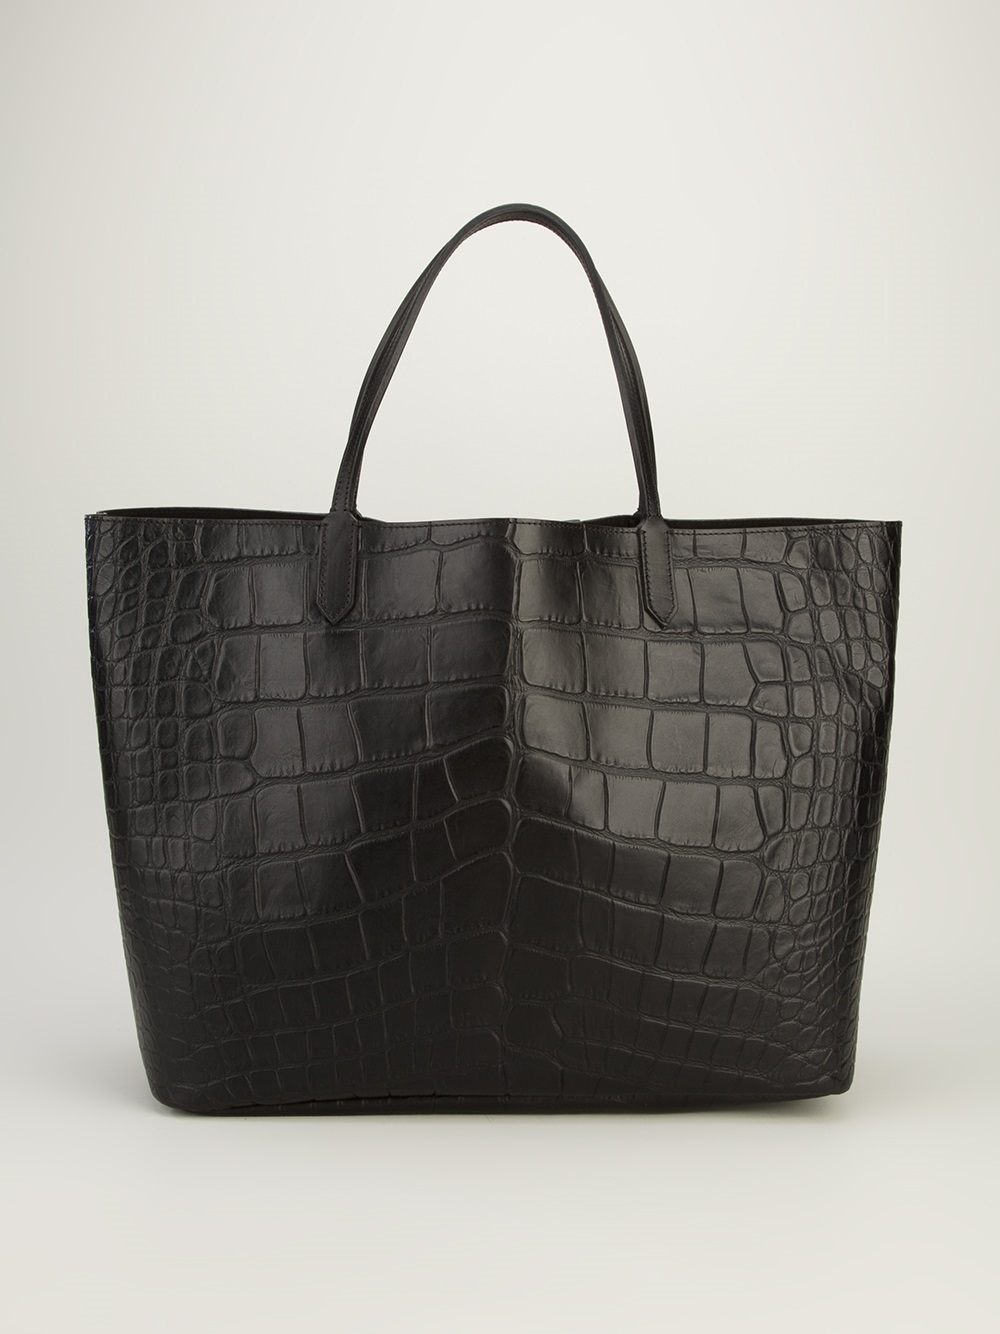 Givenchy Antigona Crocodile Effect Tote in Black - Lyst